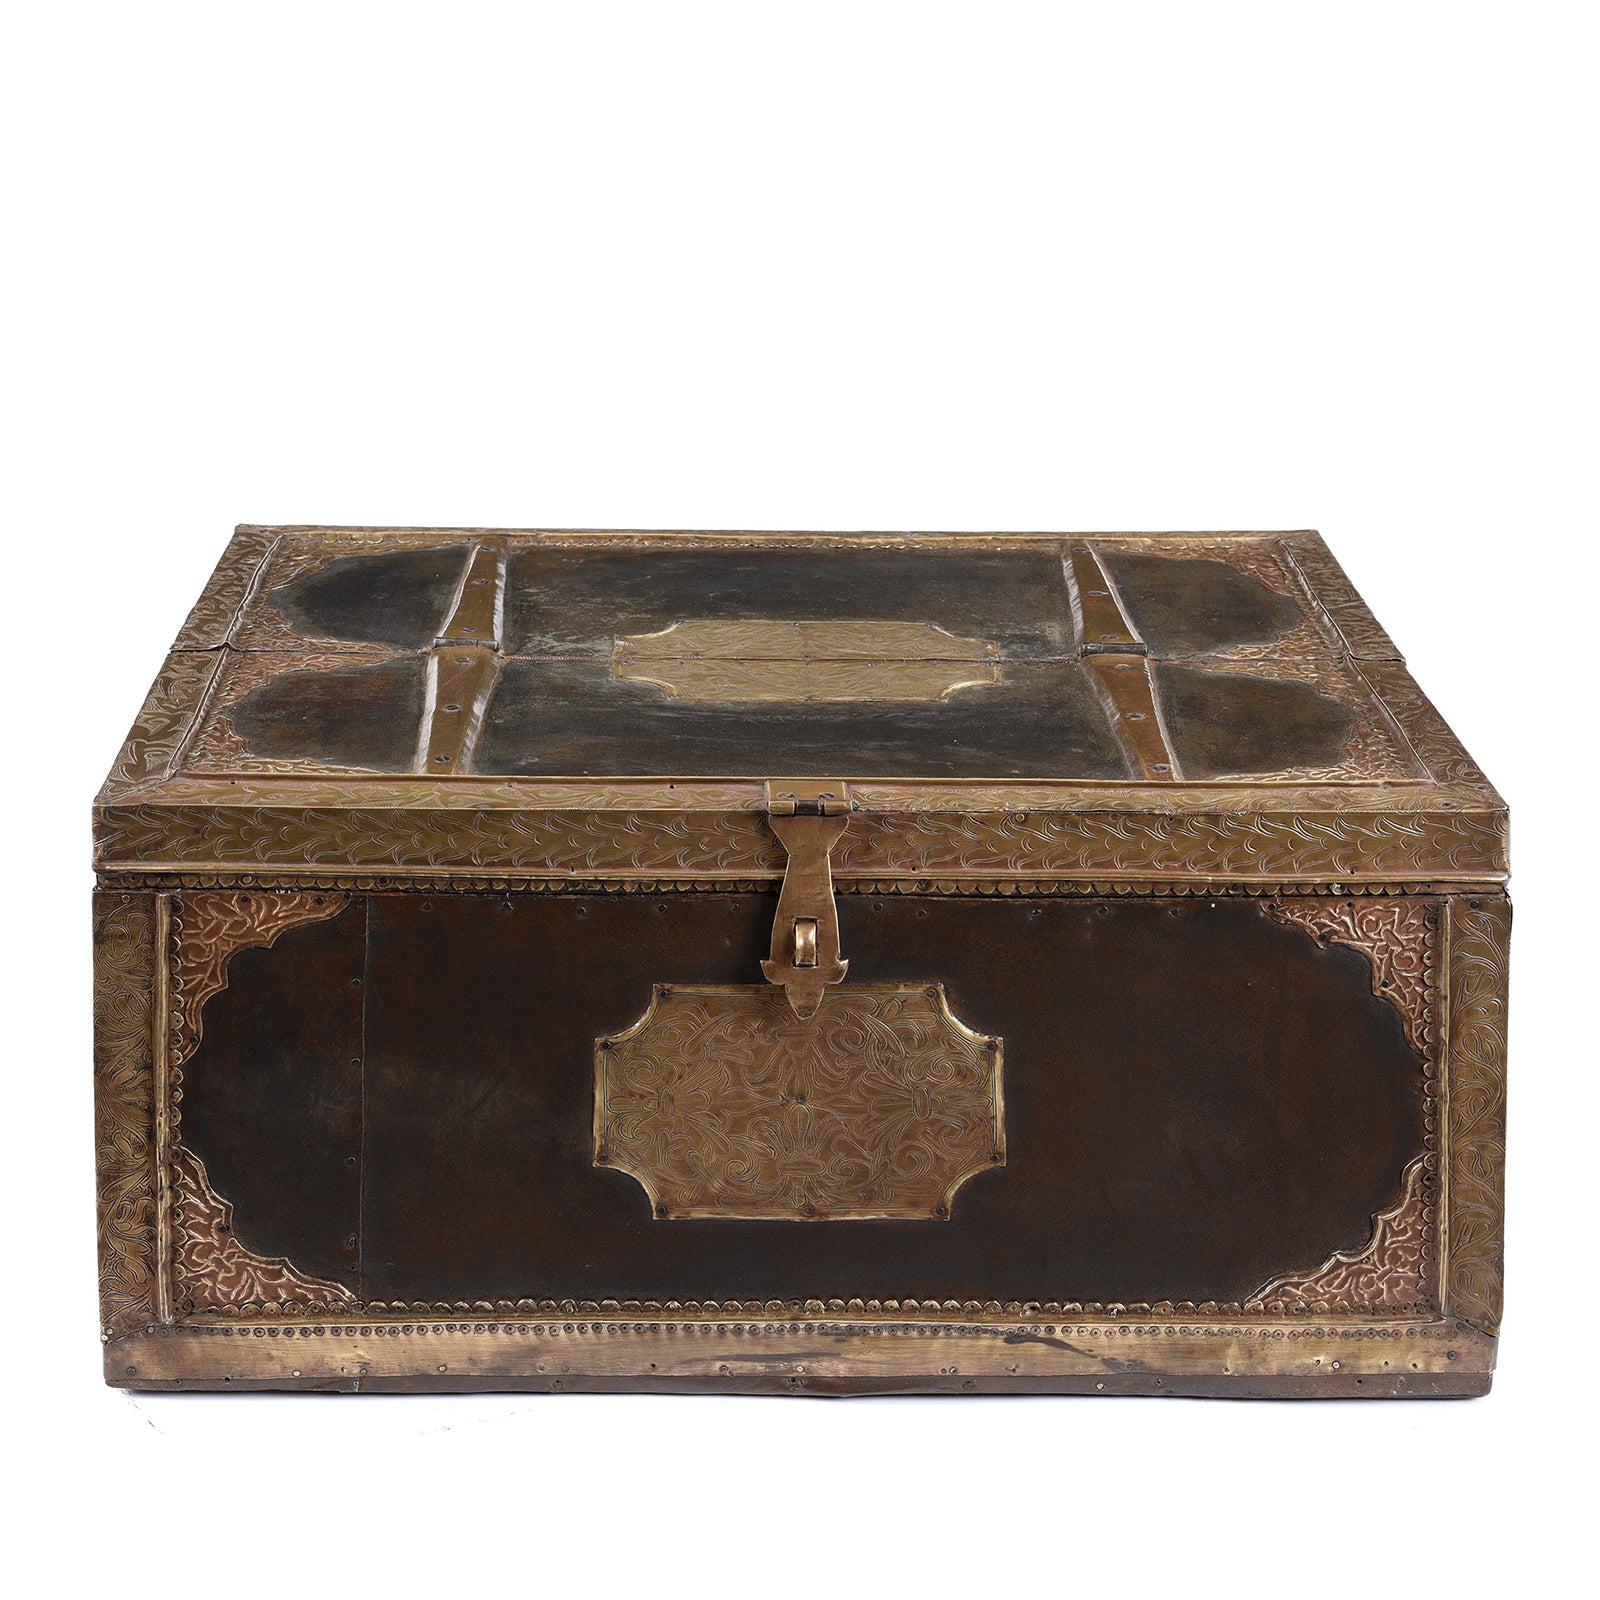 Antique Dowry Box From Shekhawati - 19th Century | Indigo Antiques